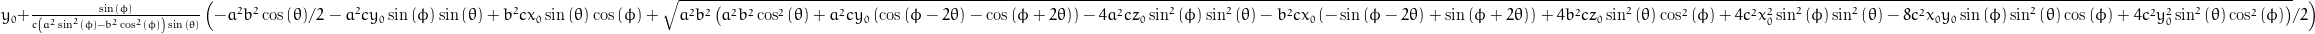 y_{0} + \frac{\sin{\left (\phi \right )}}{c \left(a^{2} \sin^{2}{\left (\phi \right )} - b^{2} \cos^{2}{\left (\phi \right )}\right) \sin{\left (\theta \right )}} \left(- \frac{a^{2} b^{2}}{2} \cos{\left (\theta \right )} - a^{2} c y_{0} \sin{\left (\phi \right )} \sin{\left (\theta \right )} + b^{2} c x_{0} \sin{\left (\theta \right )} \cos{\left (\phi \right )} + \frac{1}{2} \sqrt{a^{2} b^{2} \left(a^{2} b^{2} \cos^{2}{\left (\theta \right )} + a^{2} c y_{0} \left(\cos{\left (\phi - 2 \theta \right )} - \cos{\left (\phi + 2 \theta \right )}\right) - 4 a^{2} c z_{0} \sin^{2}{\left (\phi \right )} \sin^{2}{\left (\theta \right )} - b^{2} c x_{0} \left(- \sin{\left (\phi - 2 \theta \right )} + \sin{\left (\phi + 2 \theta \right )}\right) + 4 b^{2} c z_{0} \sin^{2}{\left (\theta \right )} \cos^{2}{\left (\phi \right )} + 4 c^{2} x_{0}^{2} \sin^{2}{\left (\phi \right )} \sin^{2}{\left (\theta \right )} - 8 c^{2} x_{0} y_{0} \sin{\left (\phi \right )} \sin^{2}{\left (\theta \right )} \cos{\left (\phi \right )} + 4 c^{2} y_{0}^{2} \sin^{2}{\left (\theta \right )} \cos^{2}{\left (\phi \right )}\right)}\right)